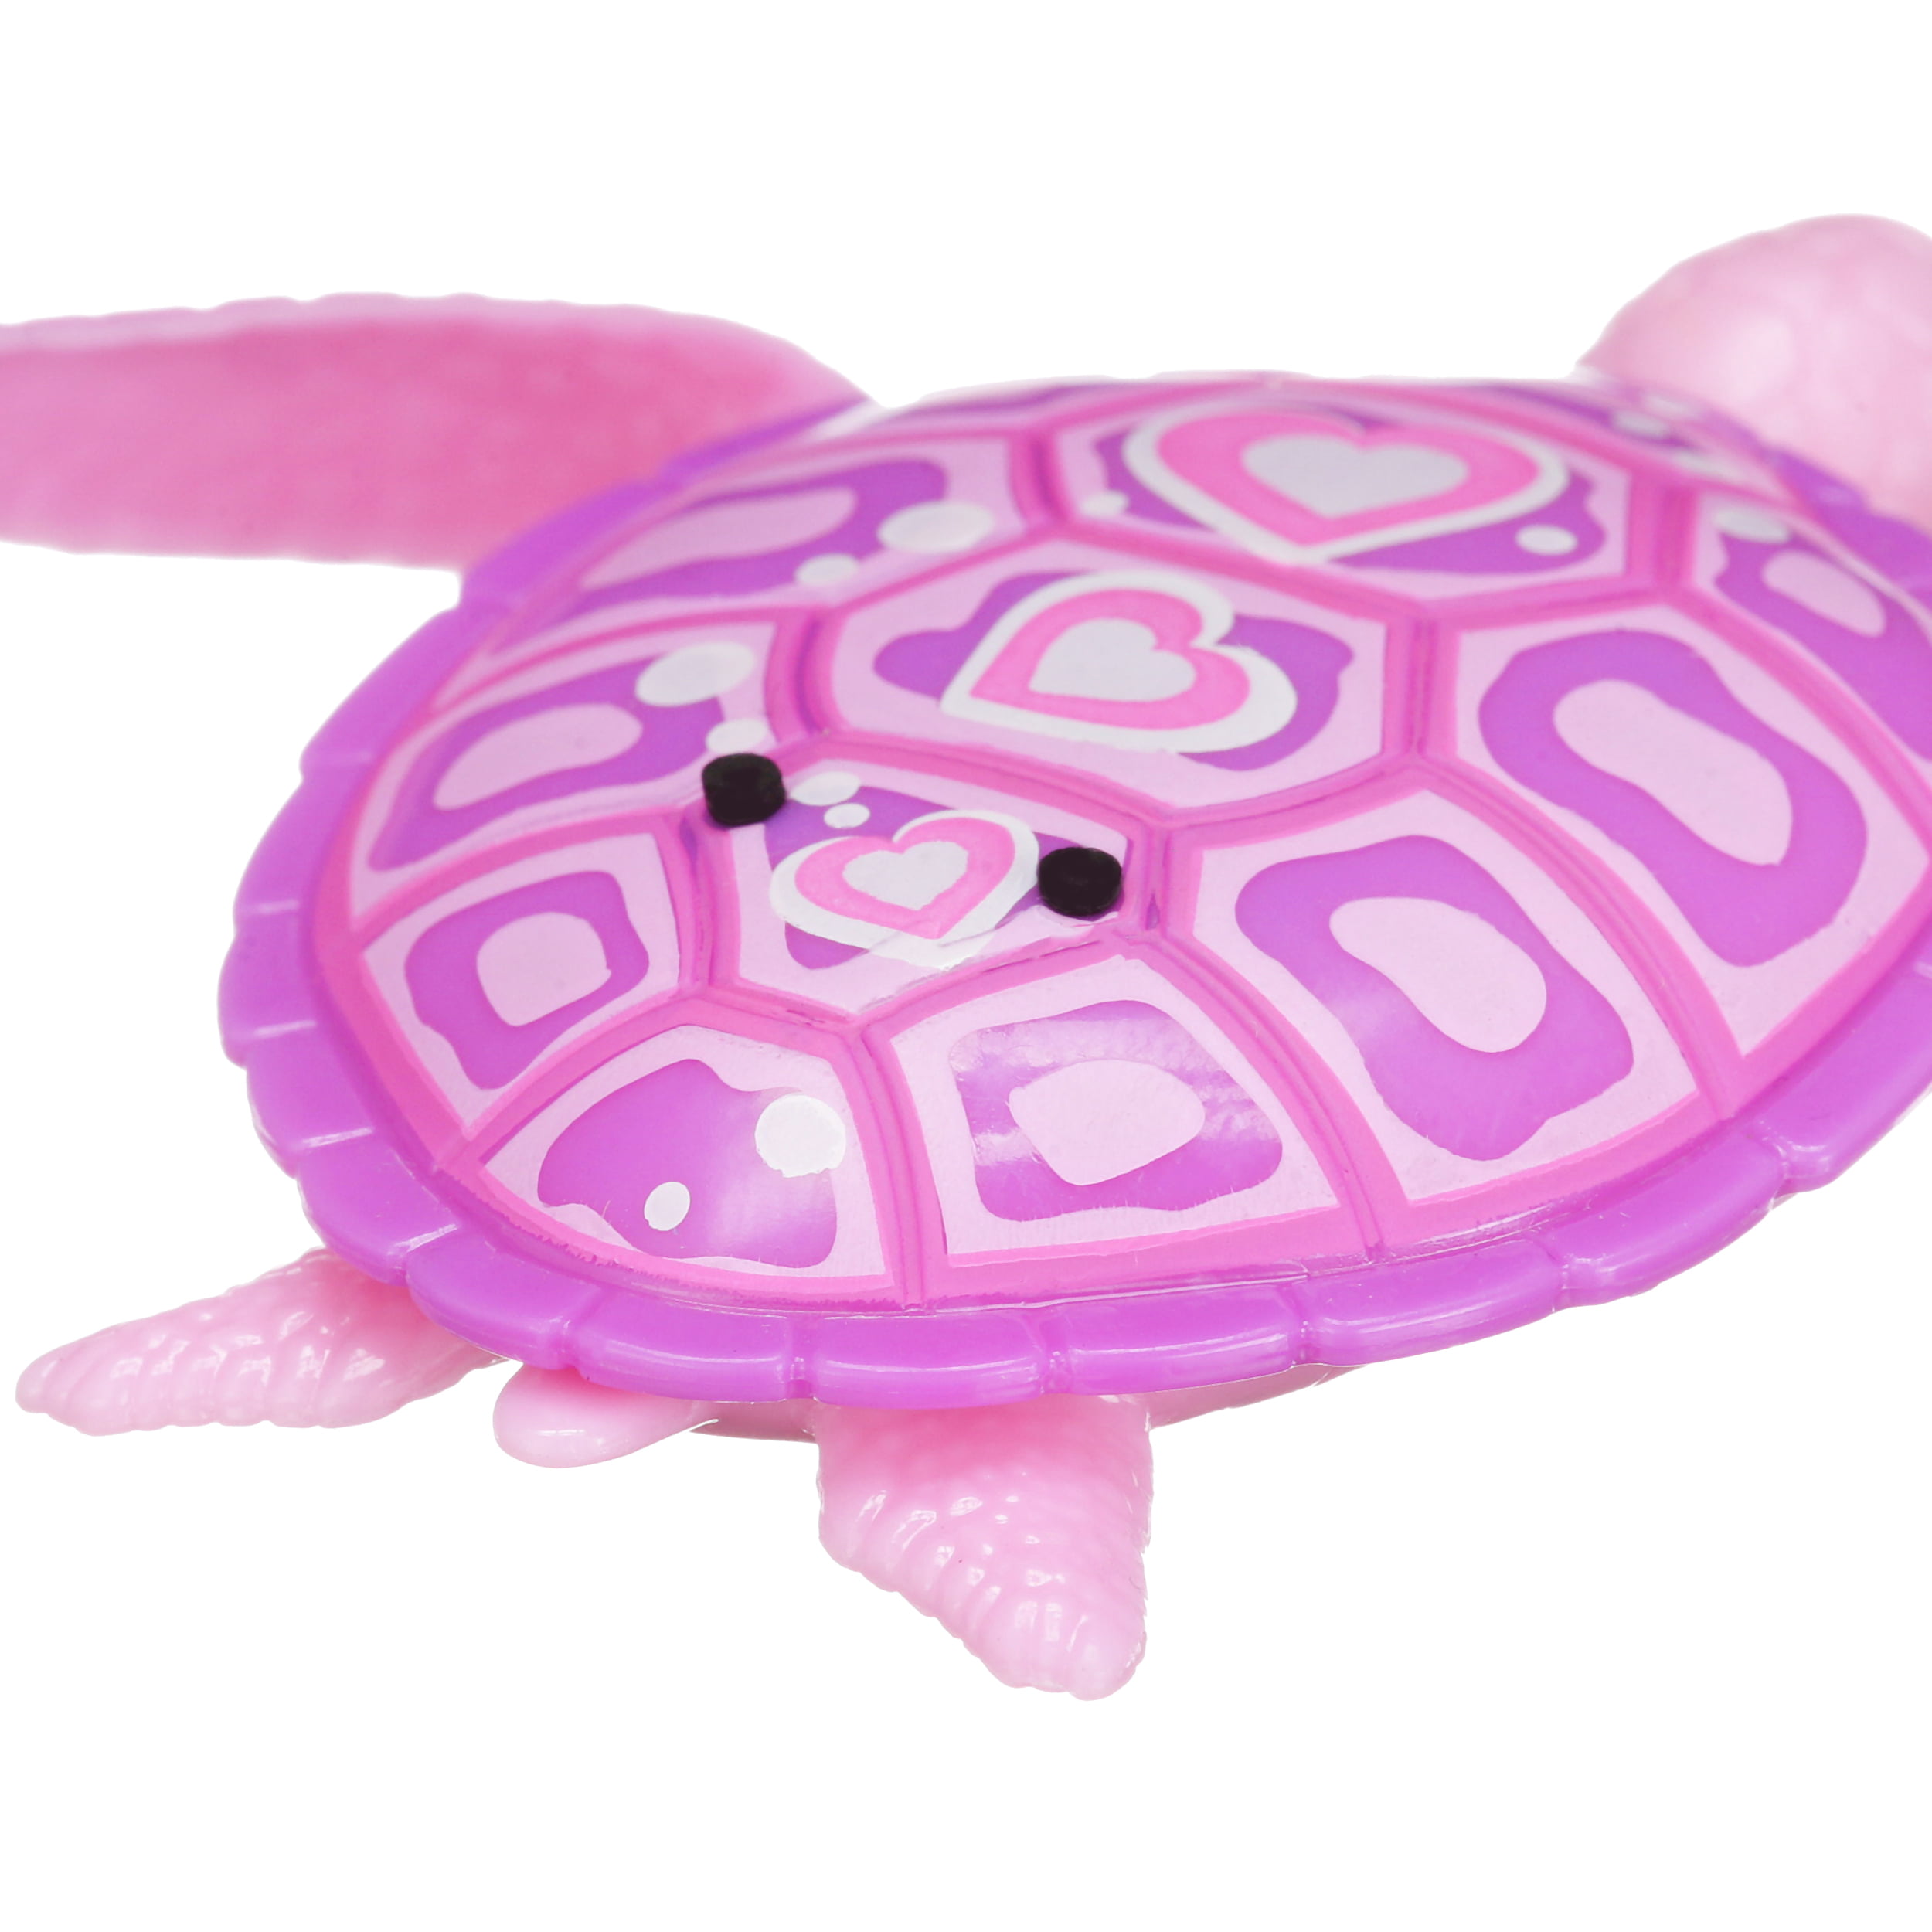 ZURU Pets Alive Robotic Electronic Pet Turtle (Pink)